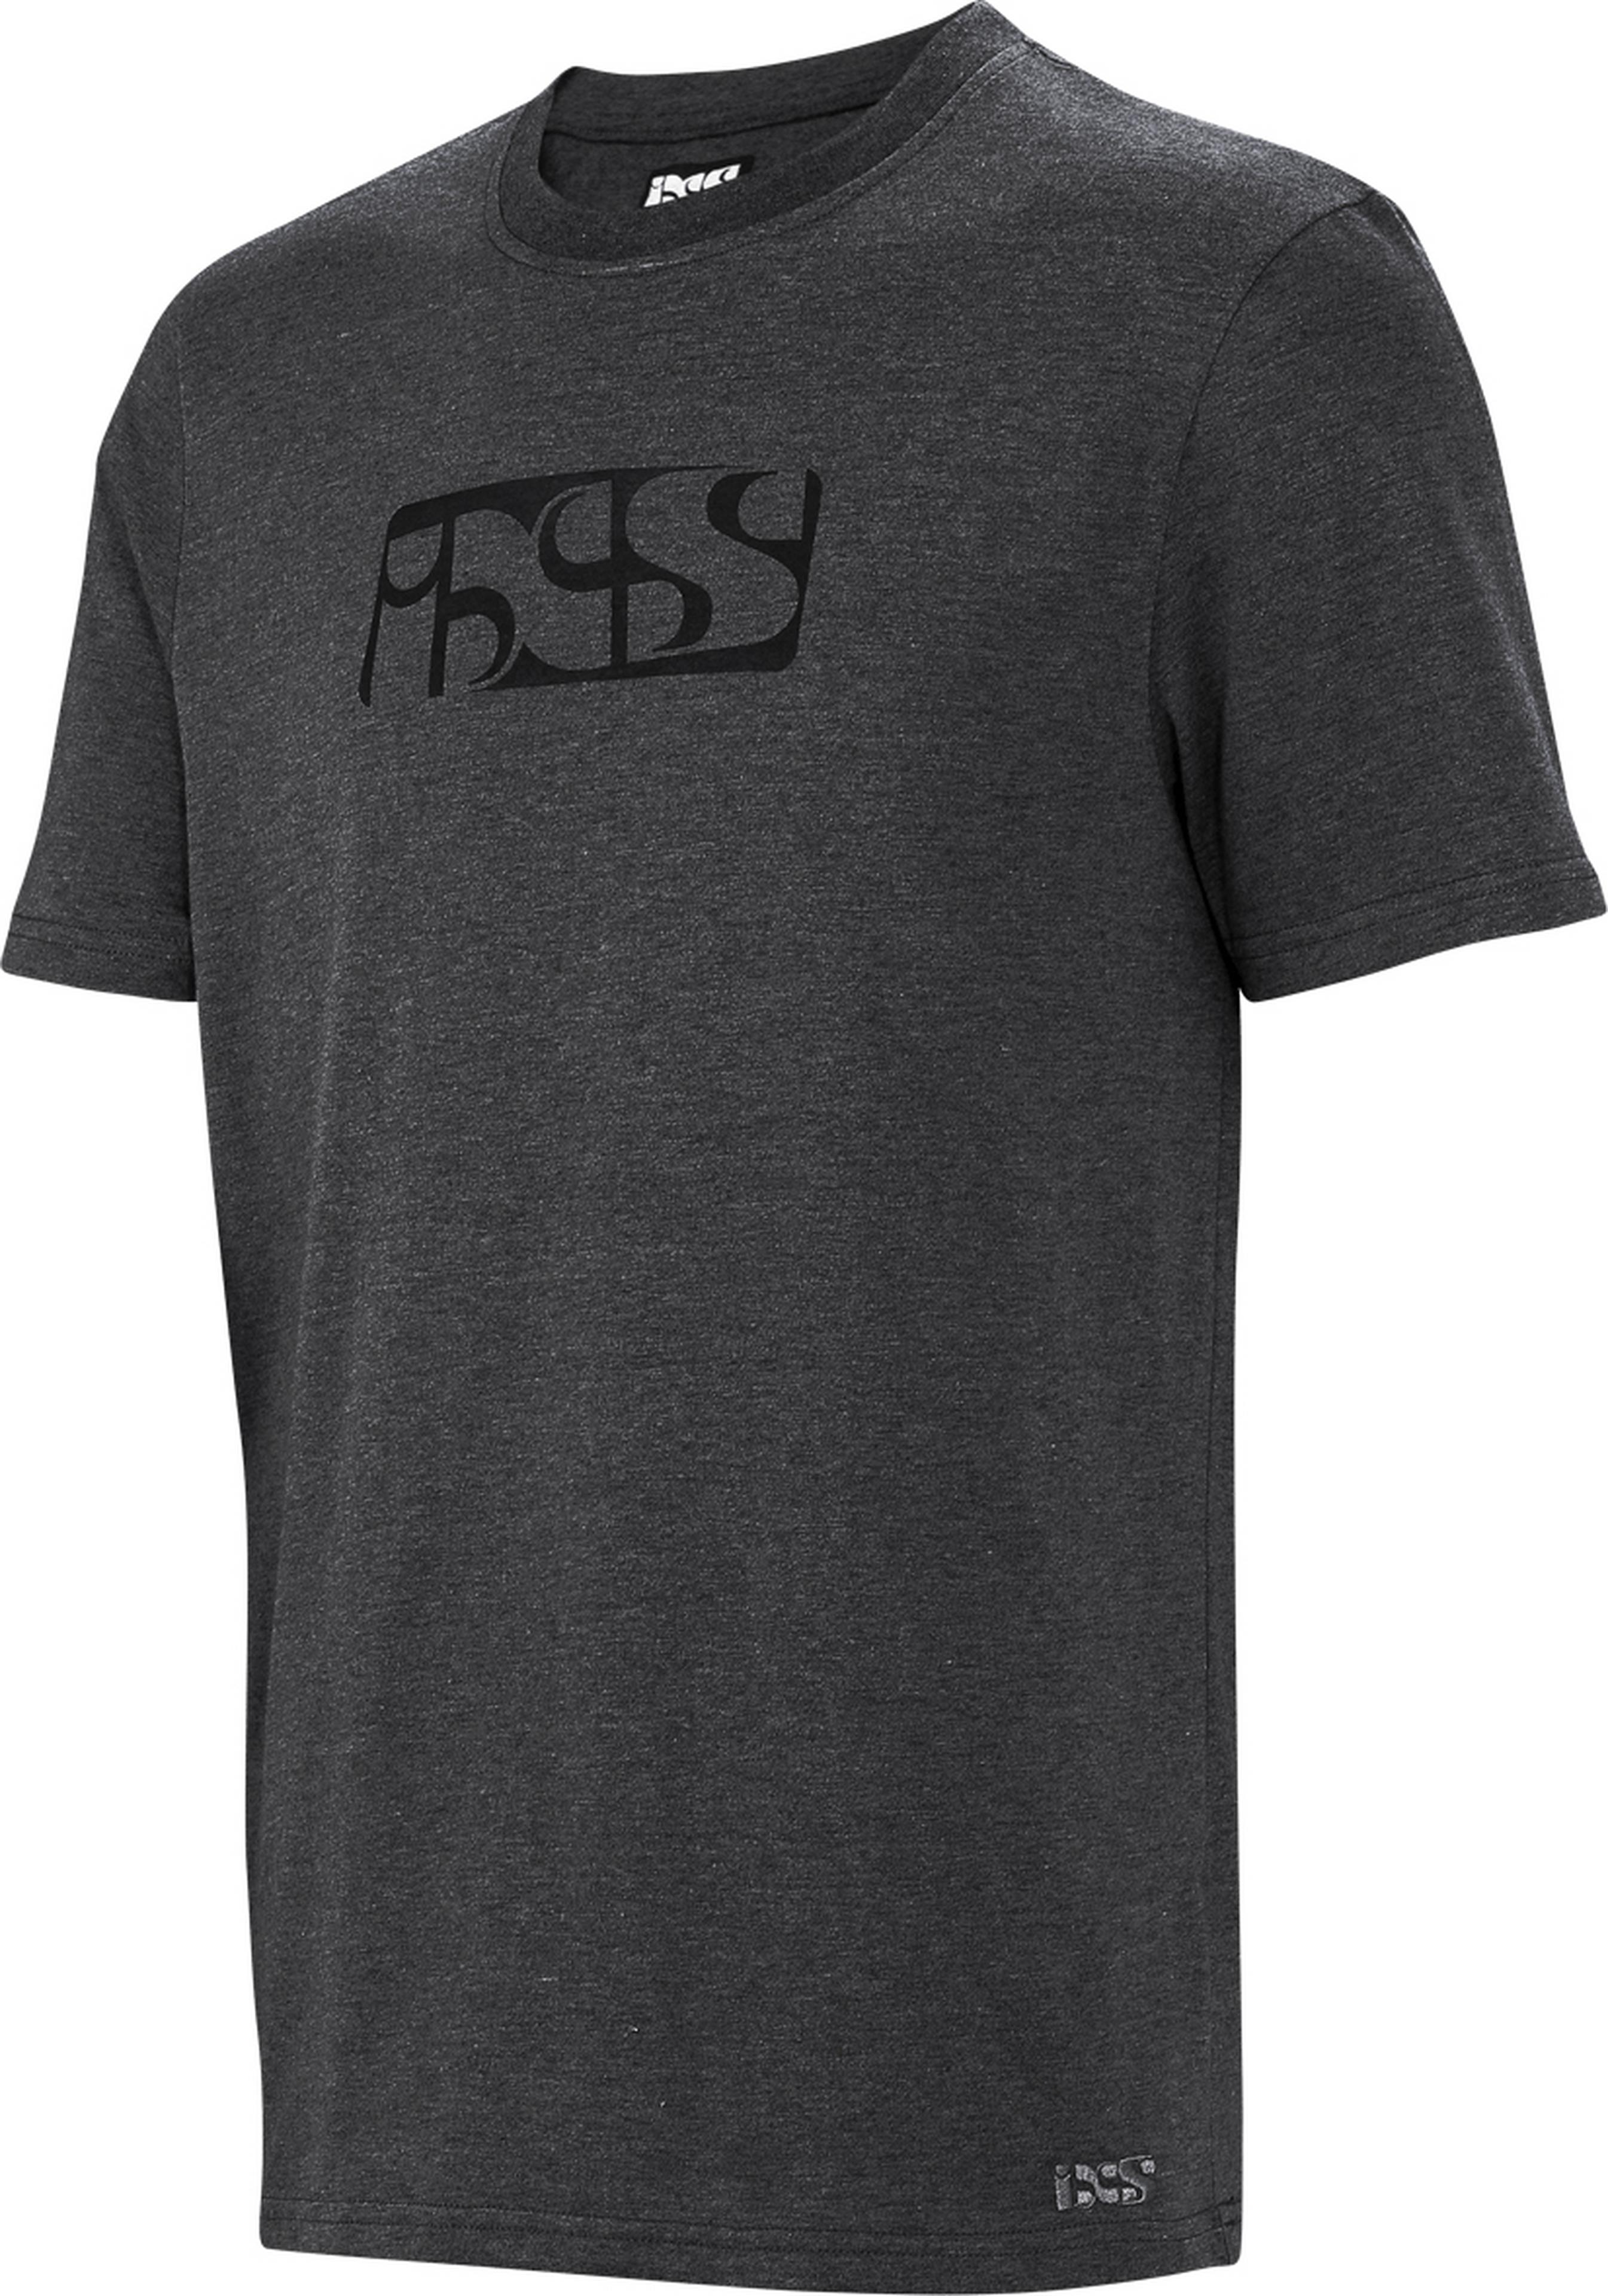 IXS Brand 6.1 T-Shirt | Chain Reaction